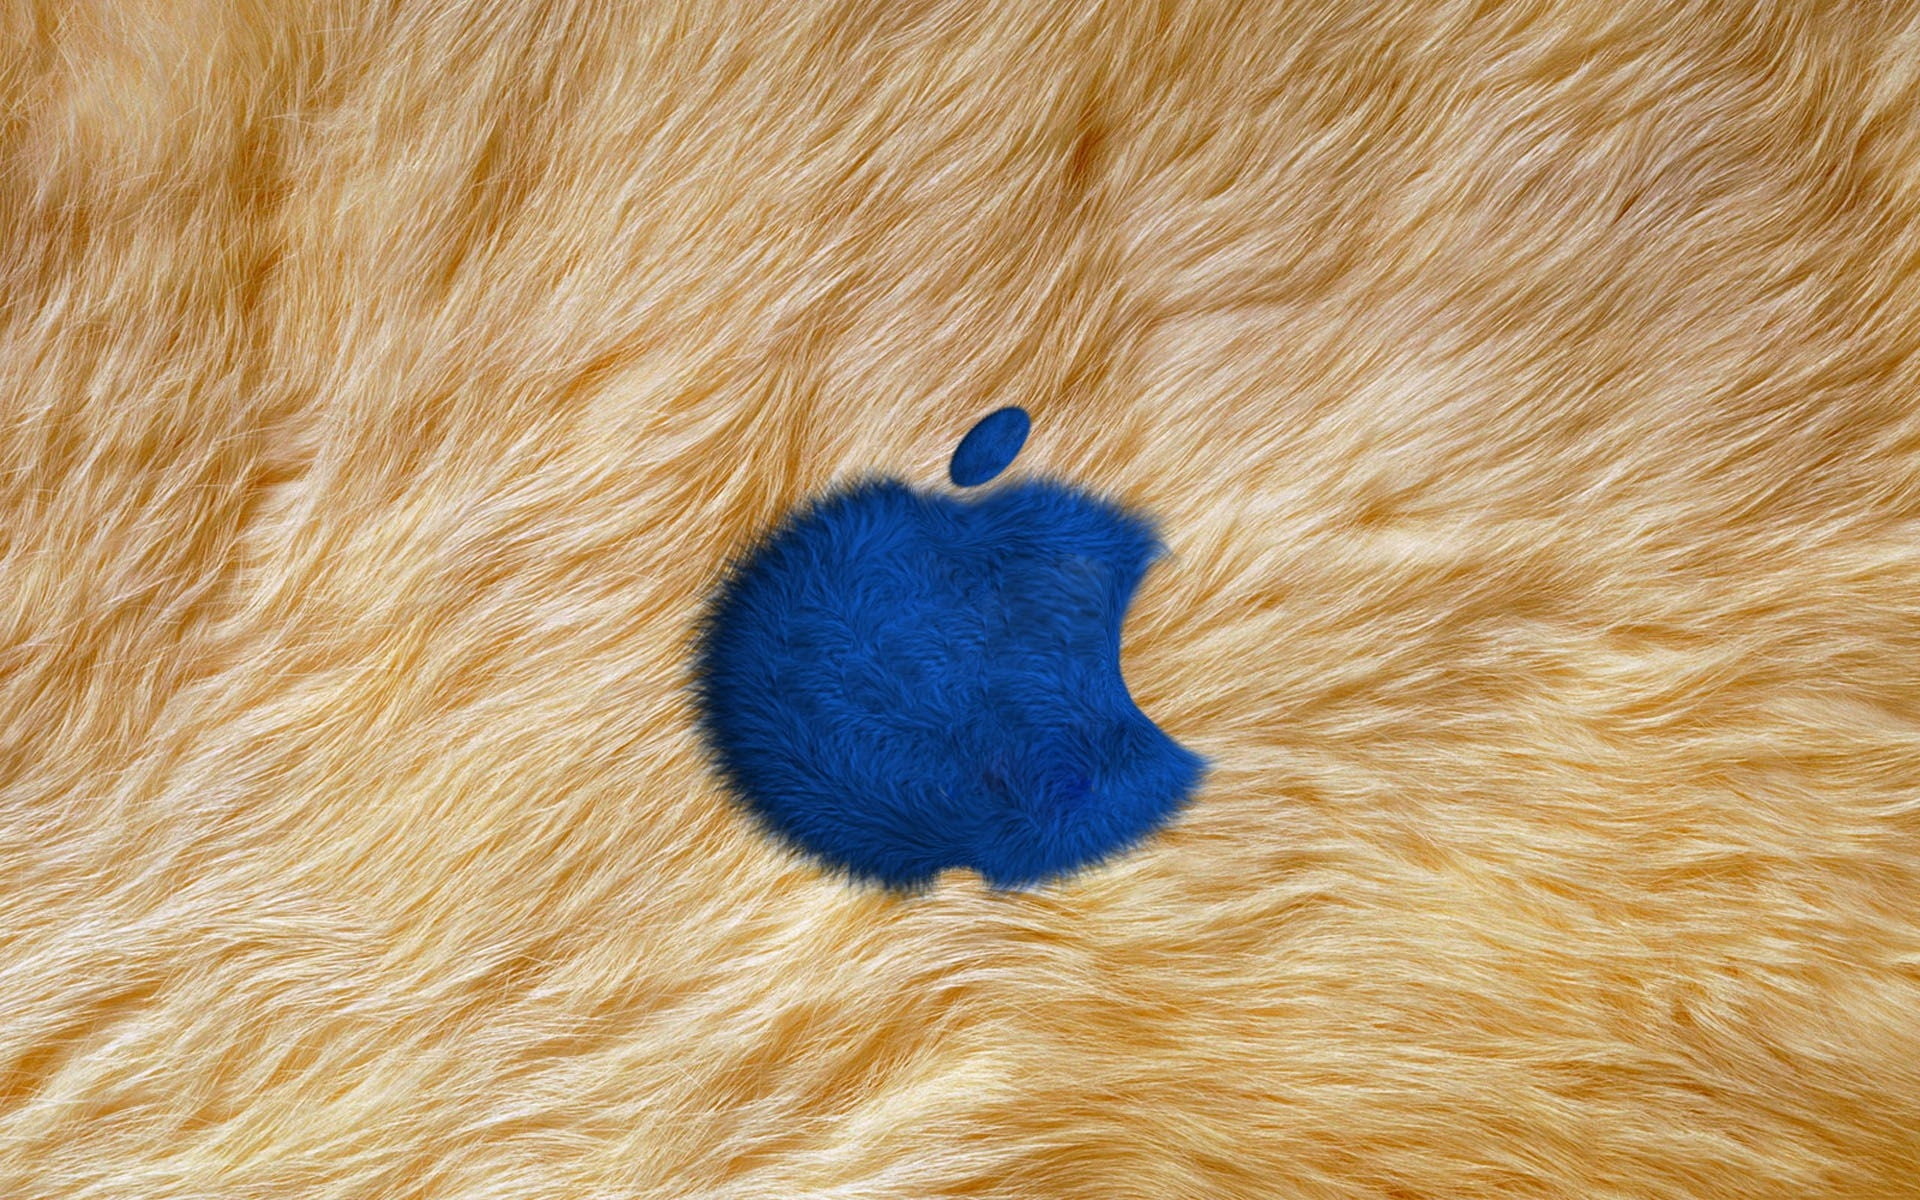 Apple logo print blue and brown sheepskin textile